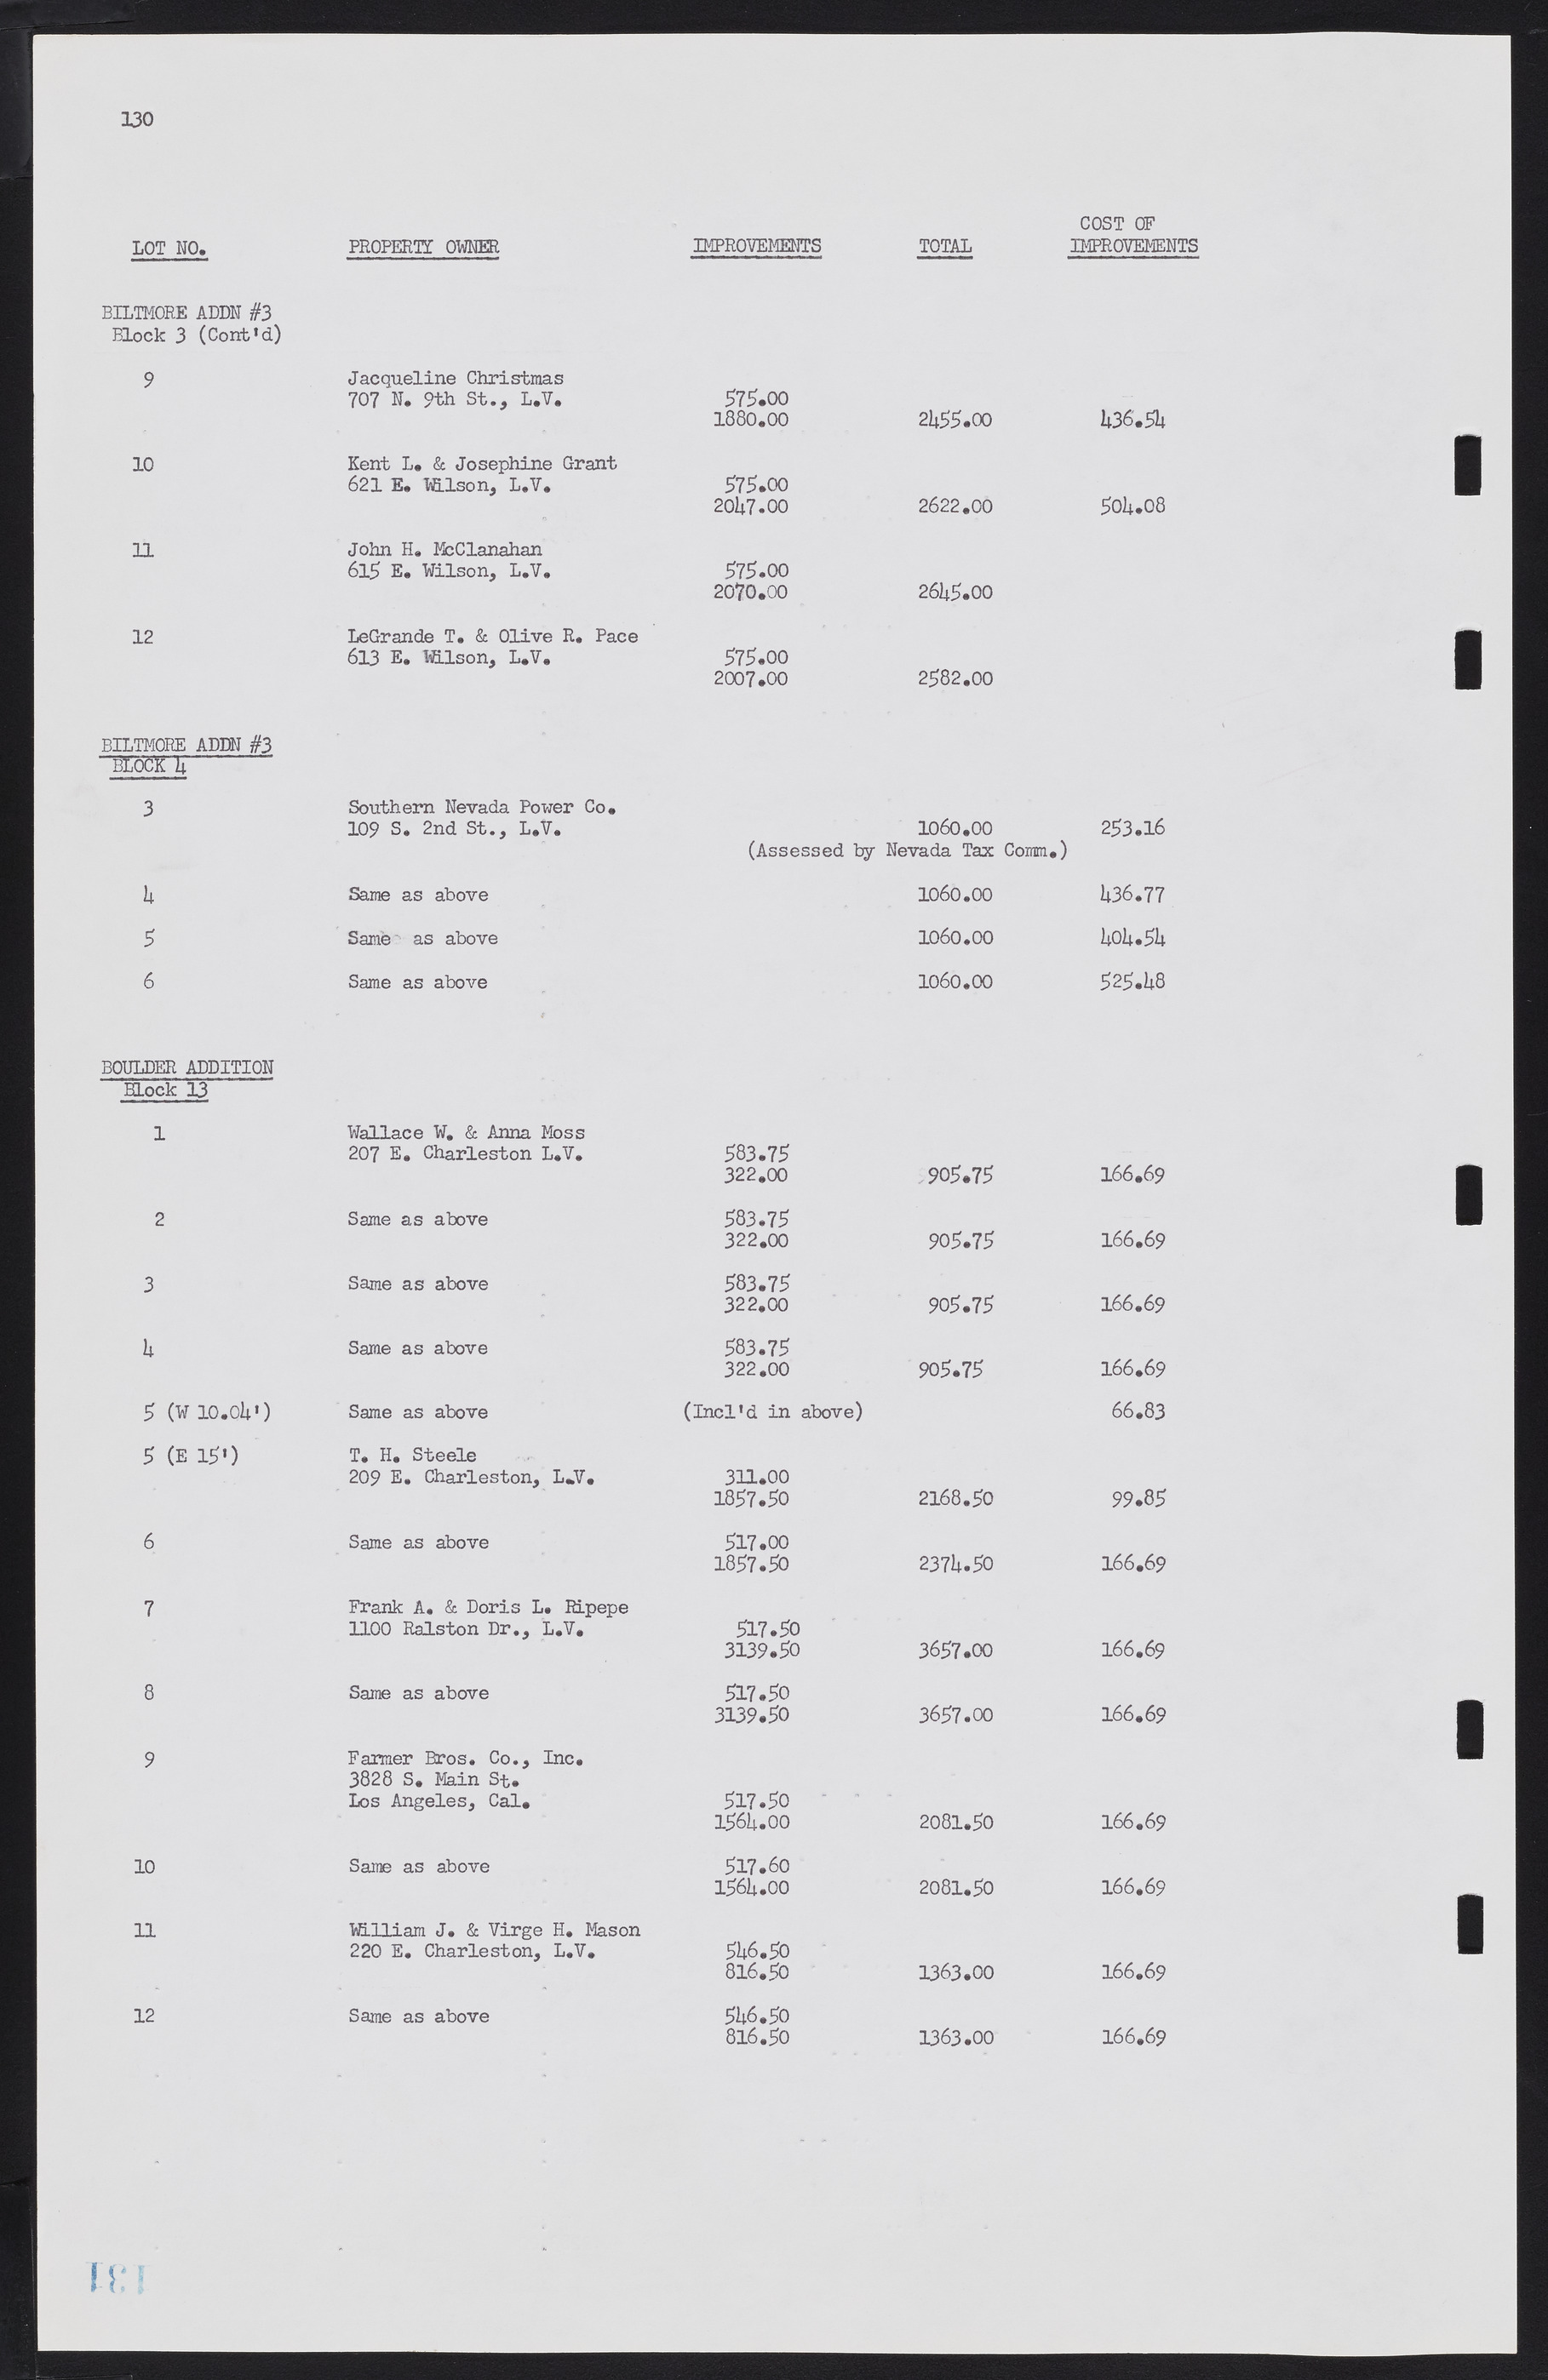 Las Vegas City Commission Minutes, February 17, 1954 to September 21, 1955, lvc000009-134